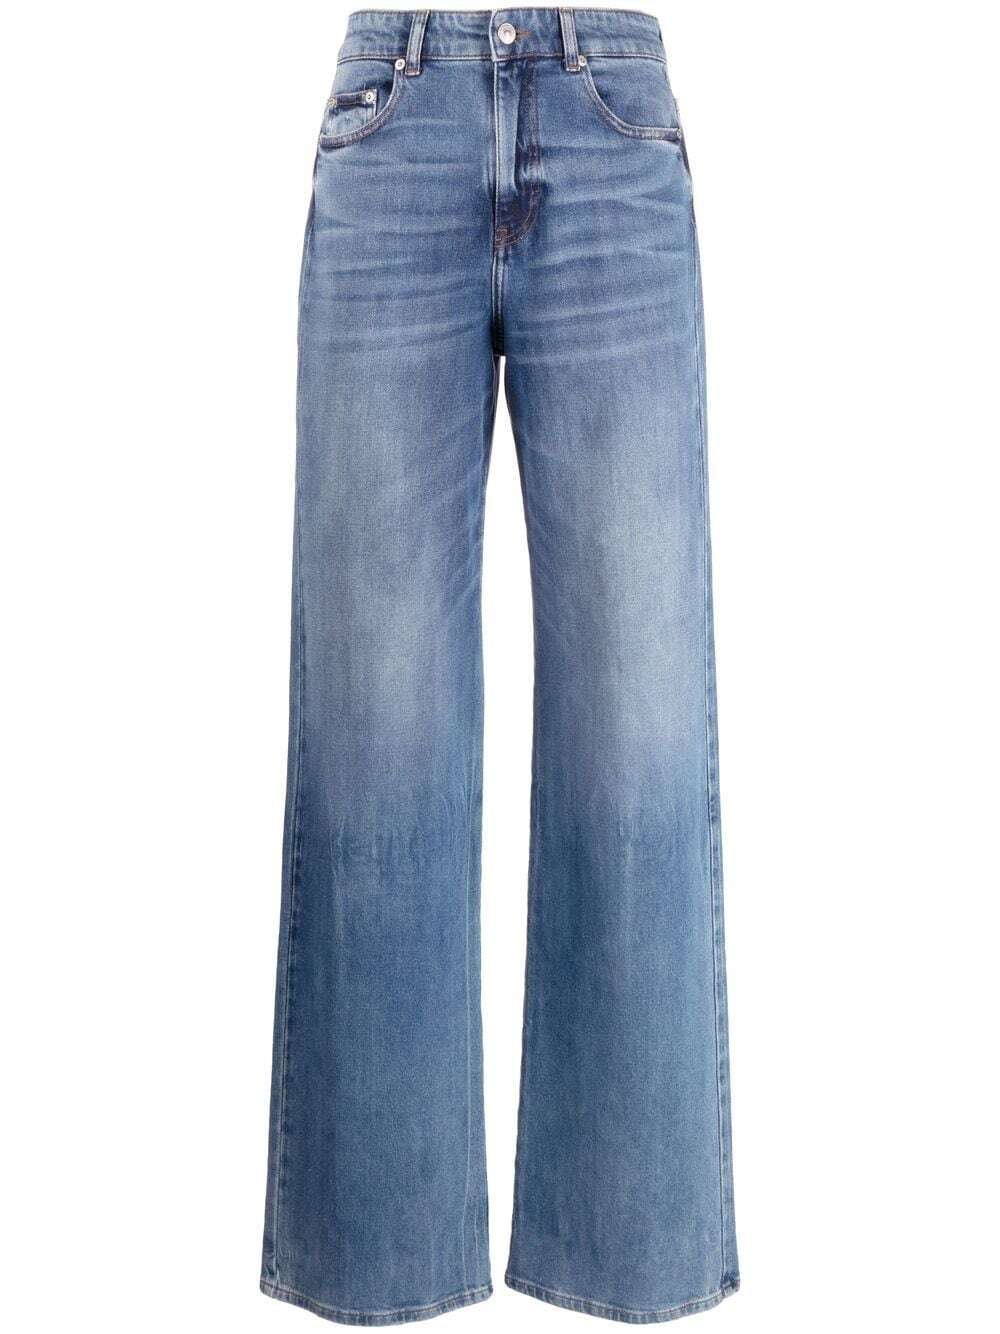 Chiara Ferragni high-waisted wide-leg jeans - Blue